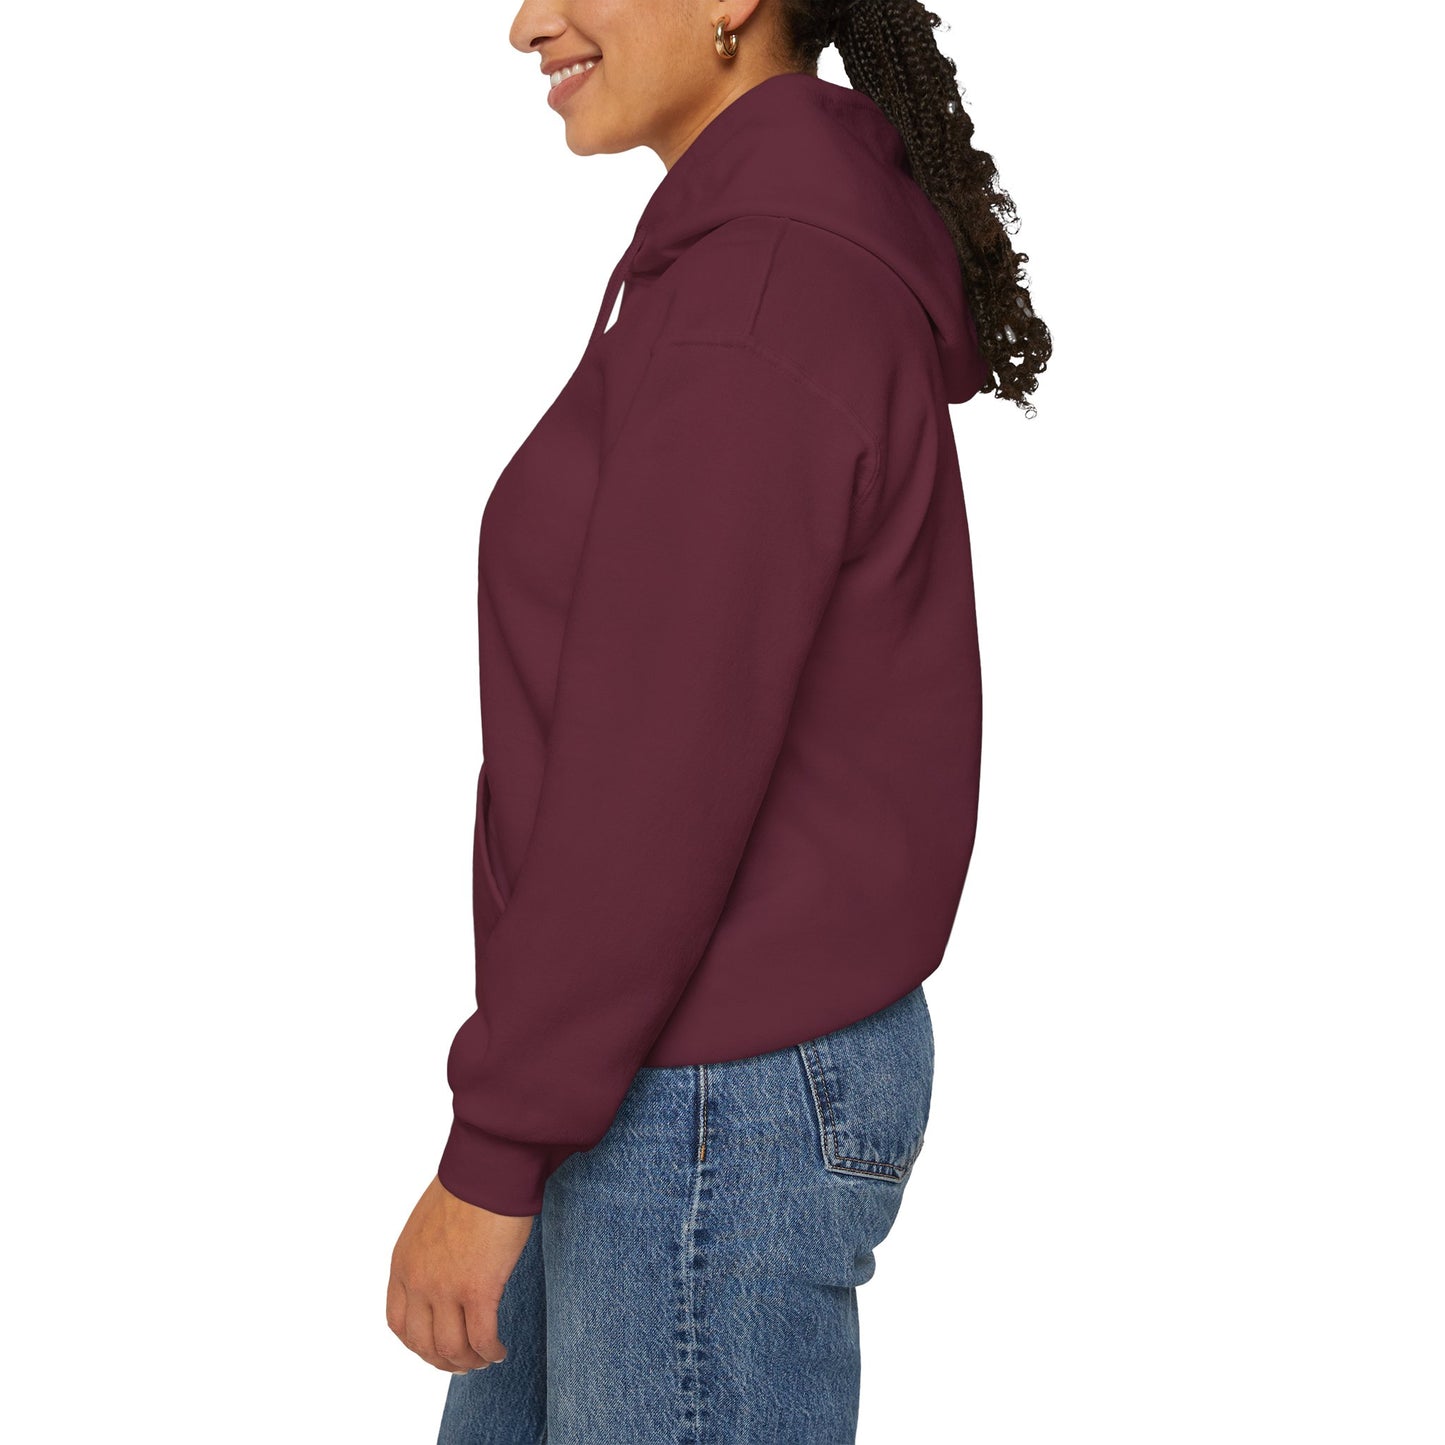 INSPIRED RAISE YOUR STANDARDS Unisex Heavy Blend™ Hooded Sweatshirt